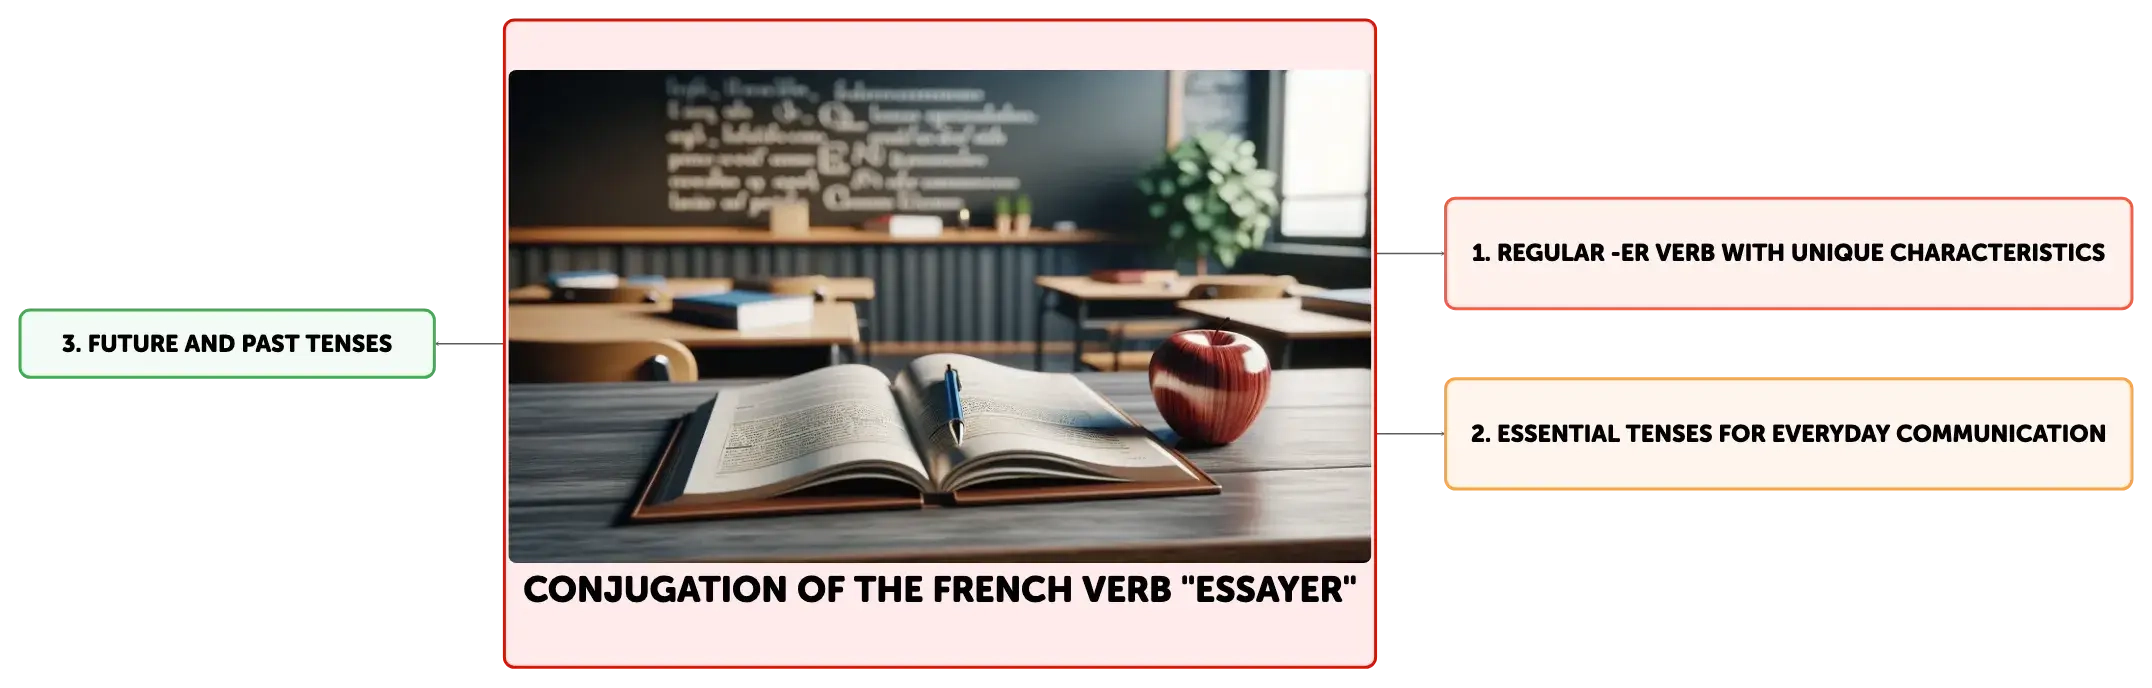 conjugation in french of essayer